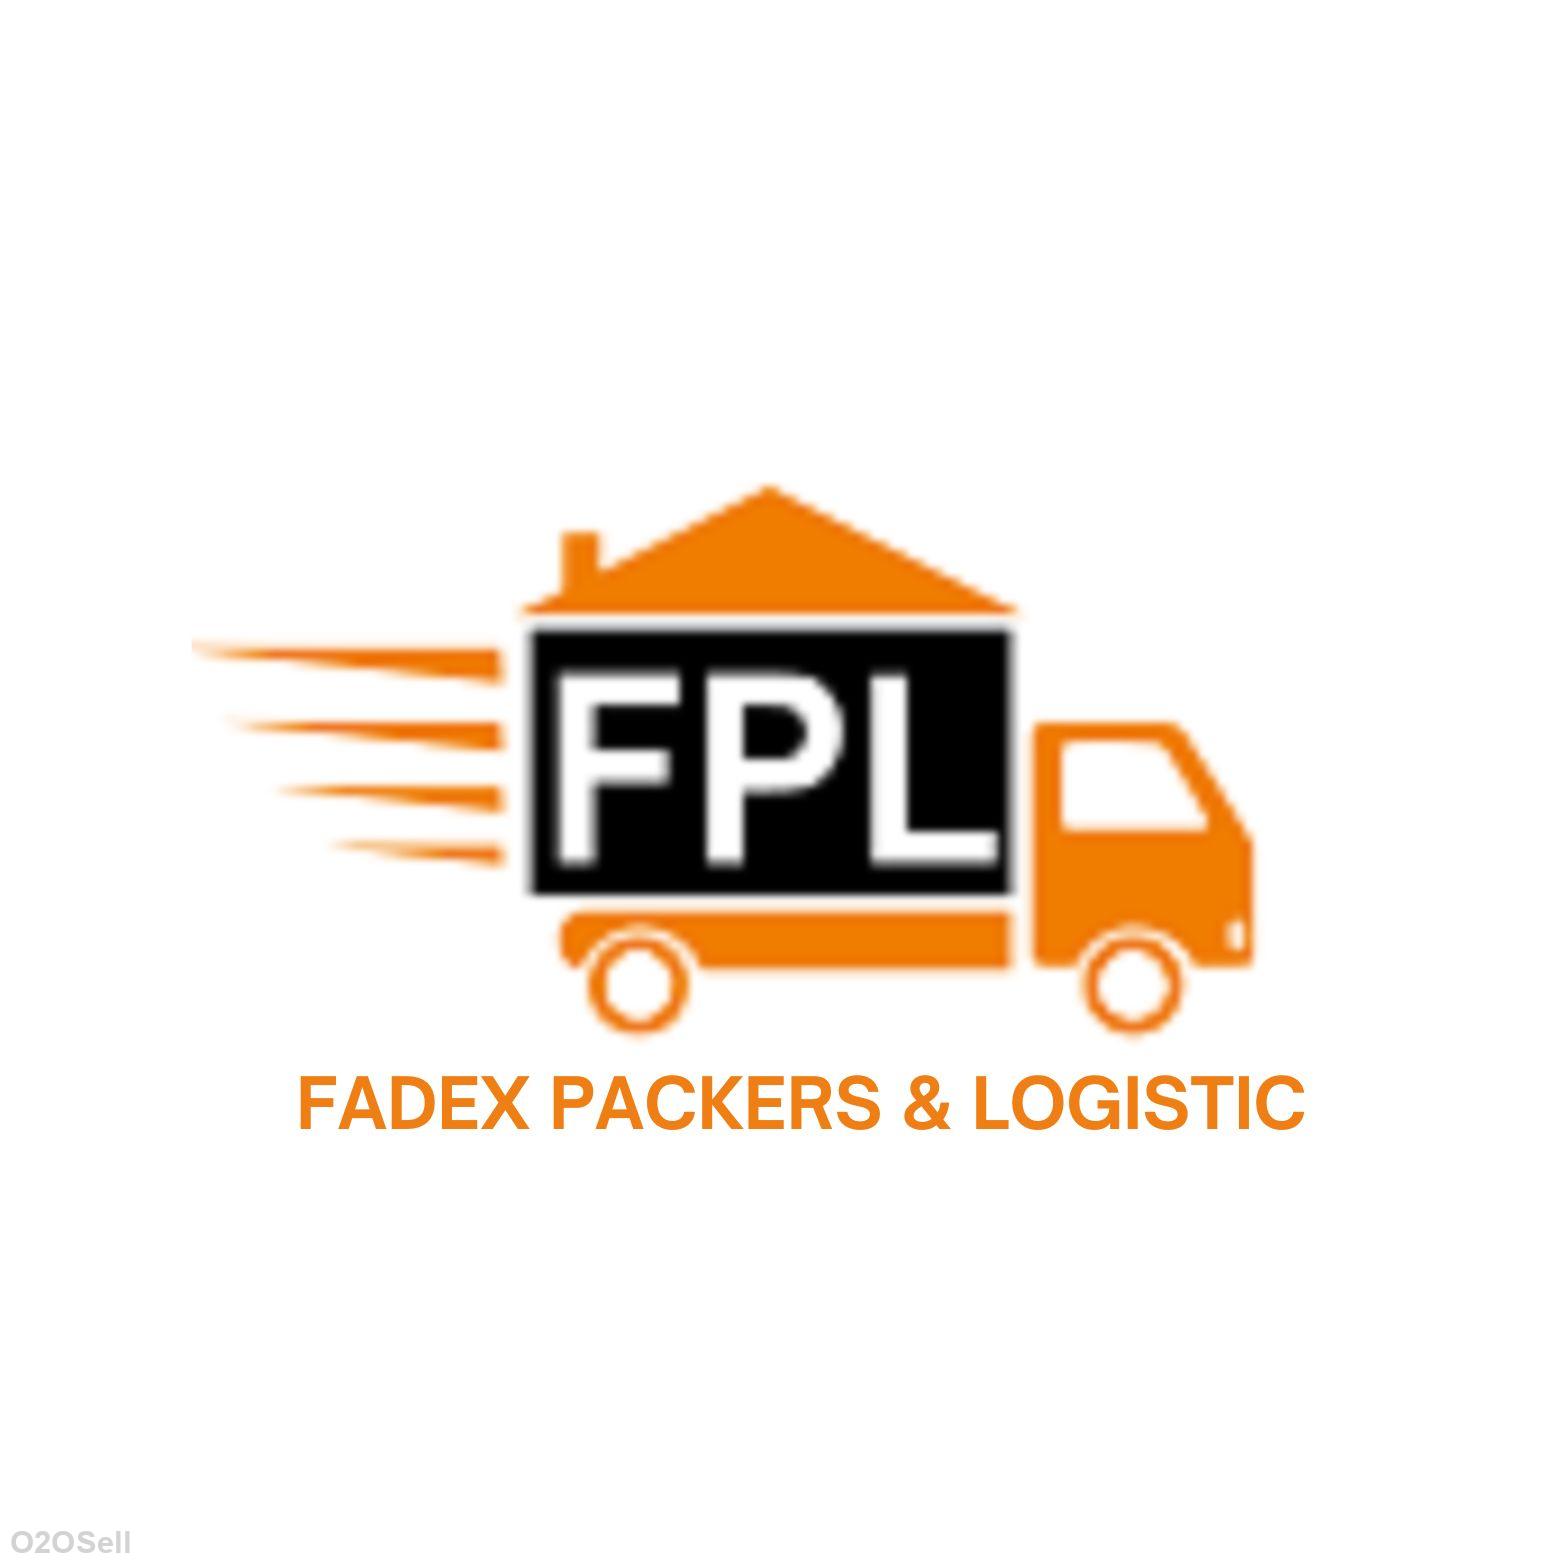 Fadex Packers & Logistics - Profile Image